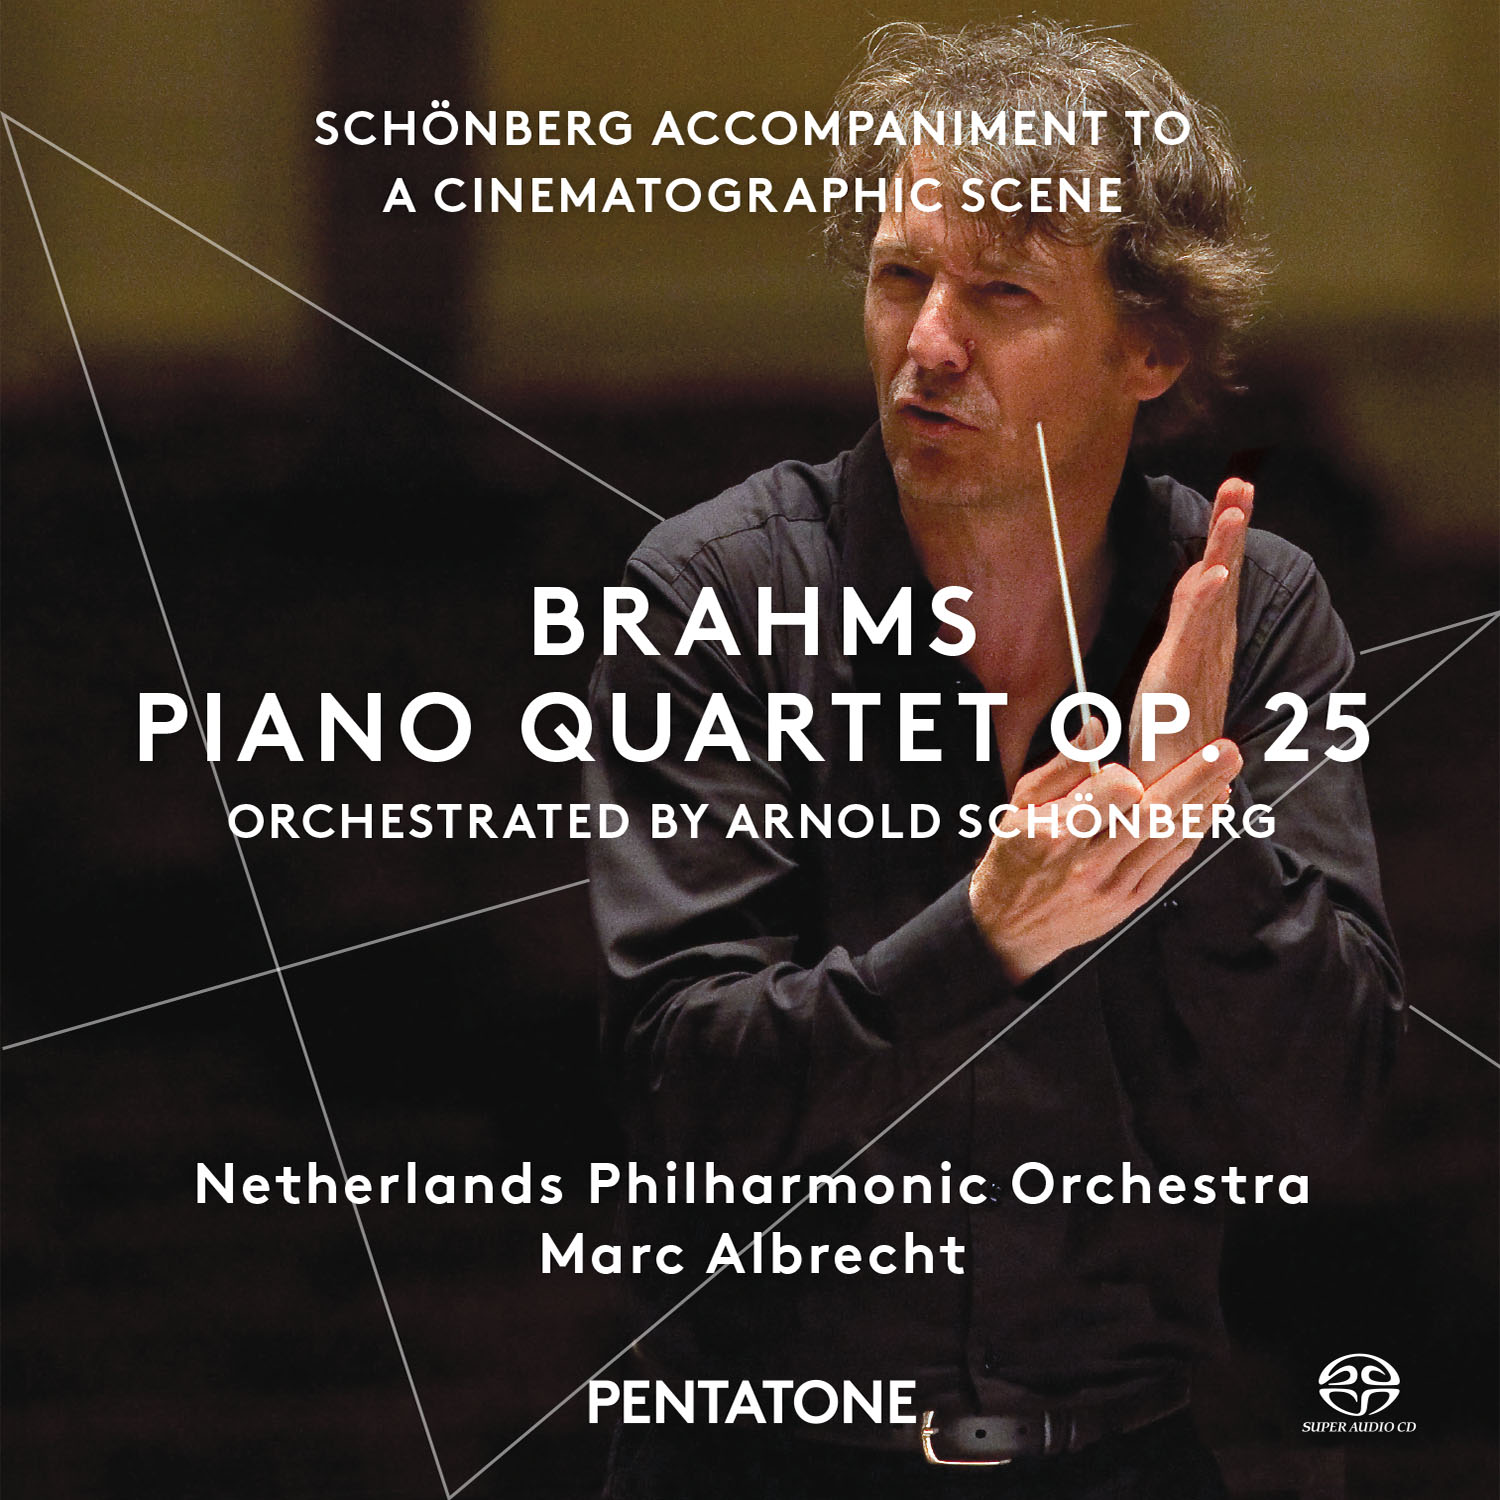 Netherlands Philharmonic Orchestra, Marc Albrecht – Brahms: Piano Quartet Op.25; Schonberg (2015) MCH SACD ISO + Hi-Res FLAC